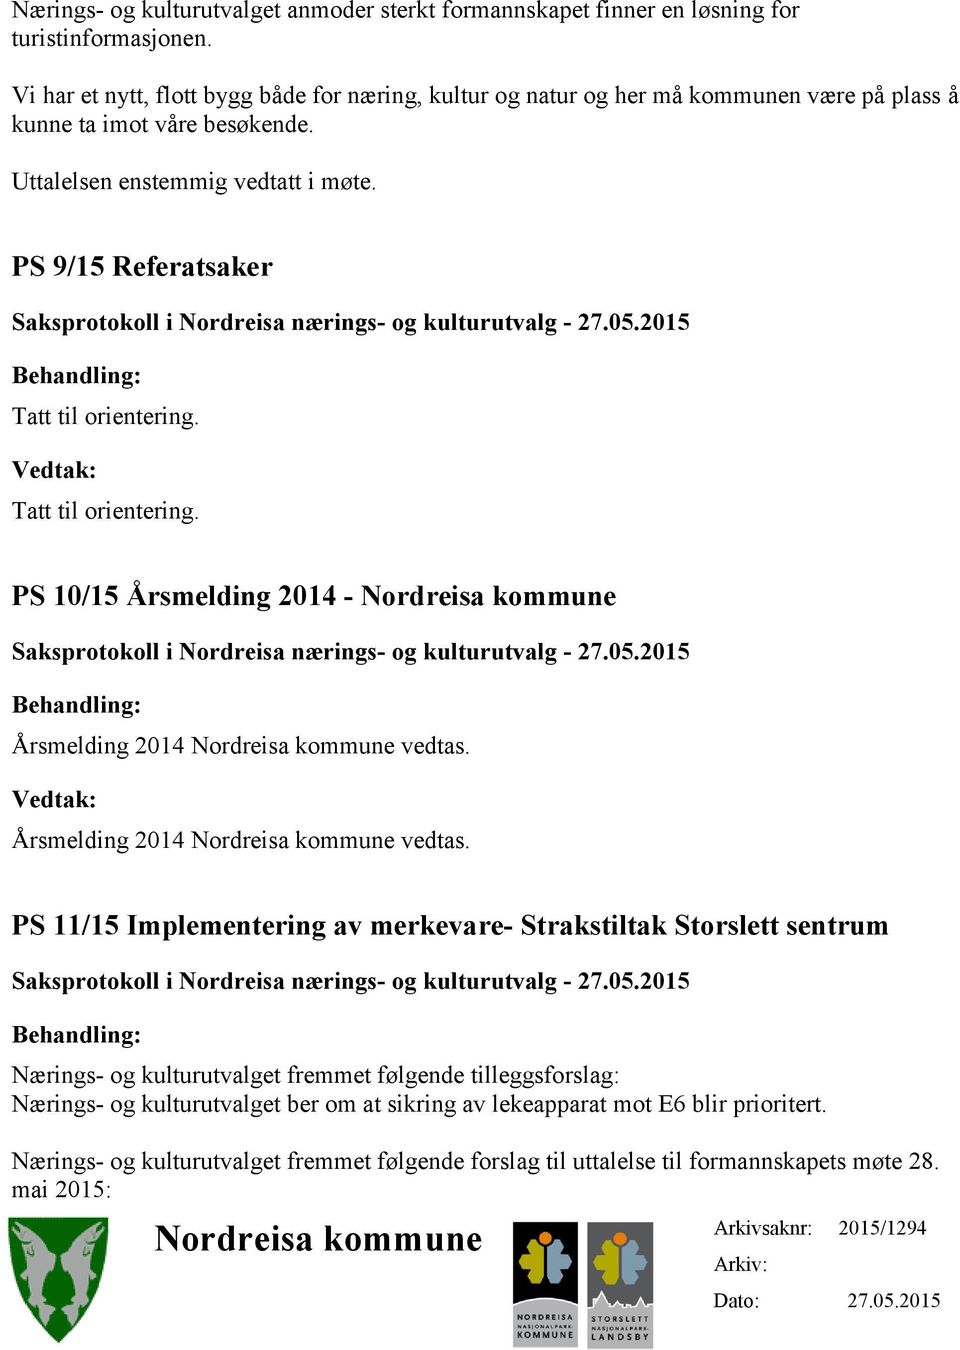 Årsmelding 2014 Nordreisa kommune vedtas.